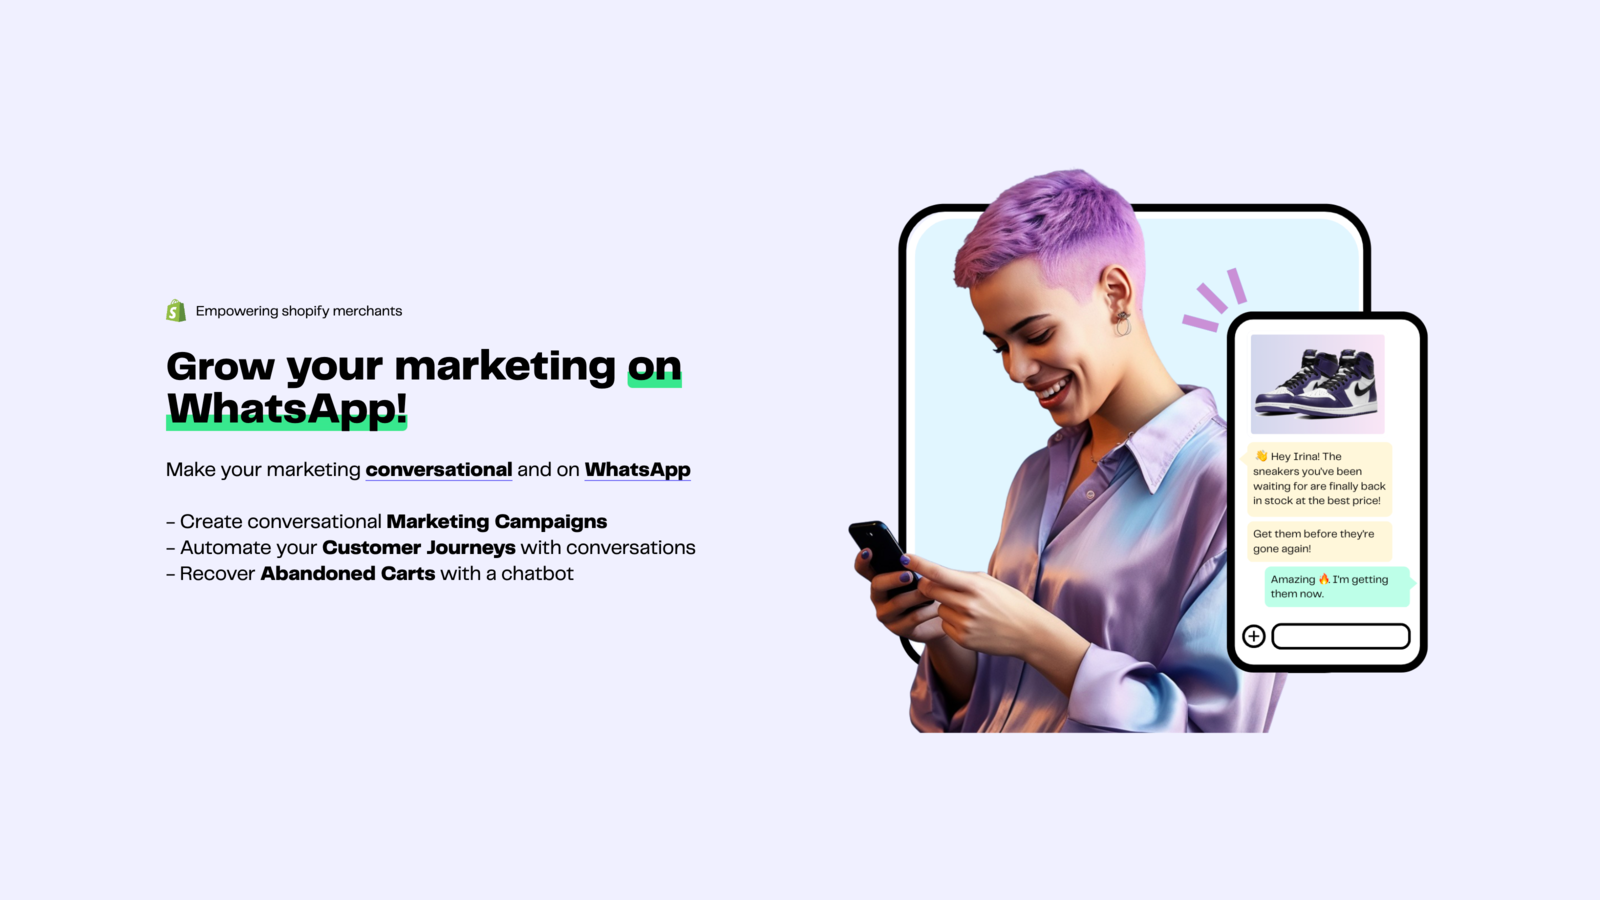 Udvid din markedsføring på WhatsApp